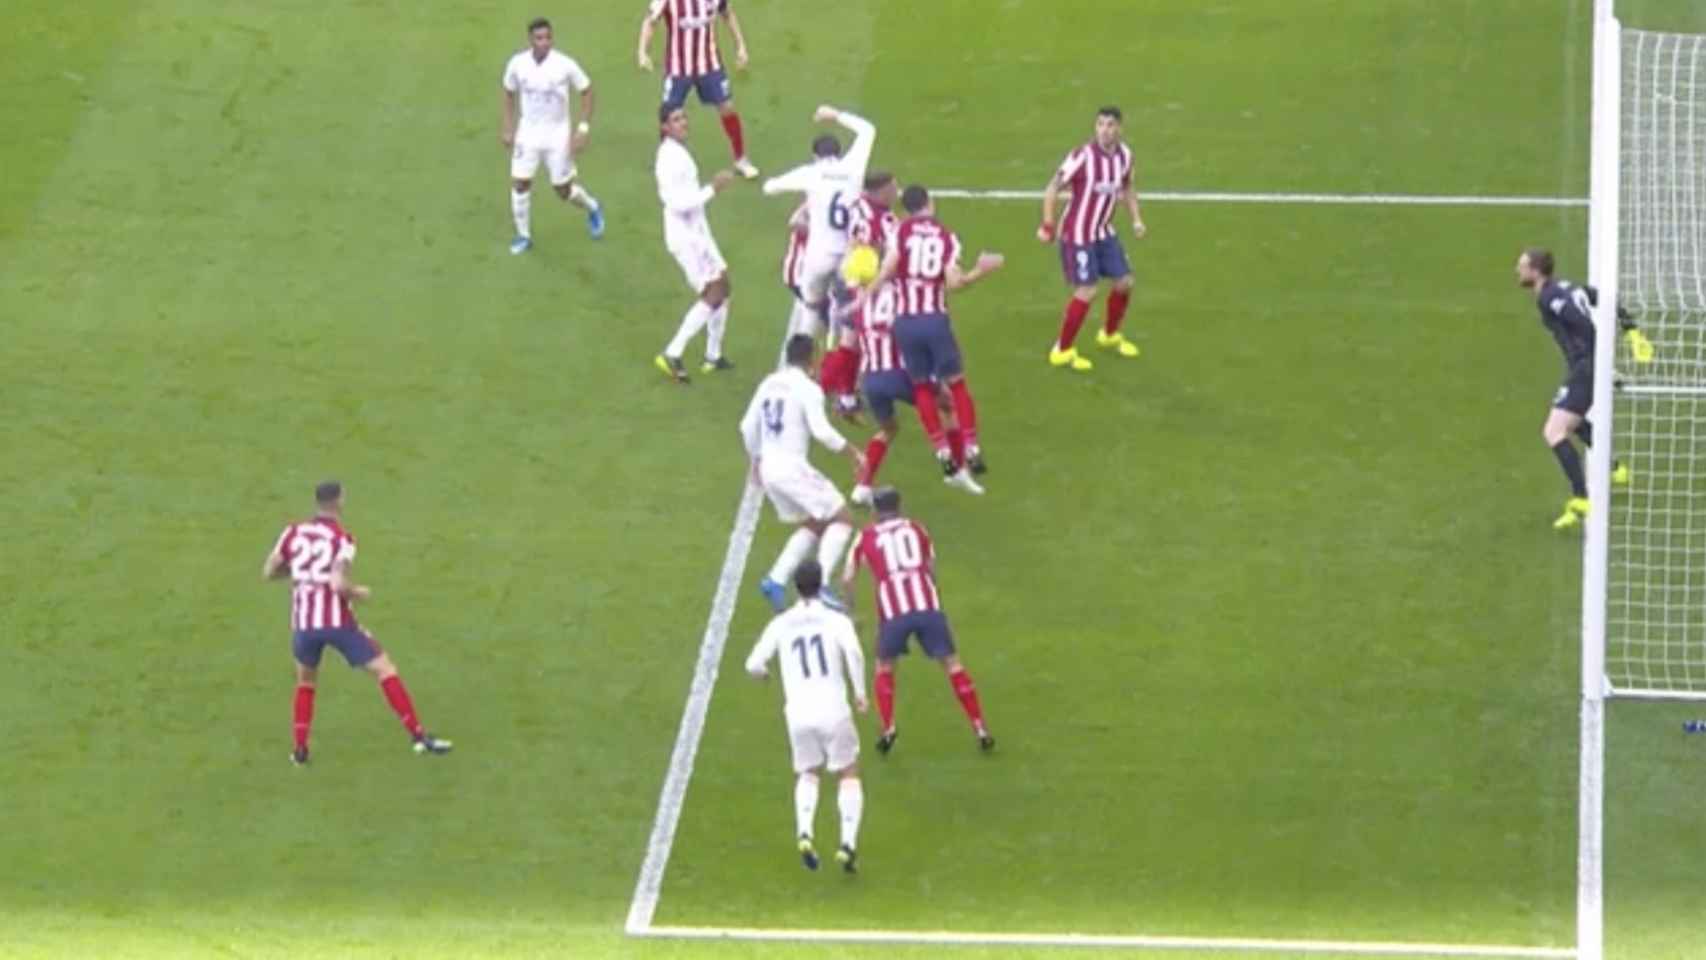 Penalti no pitado a favor del Real Madrid